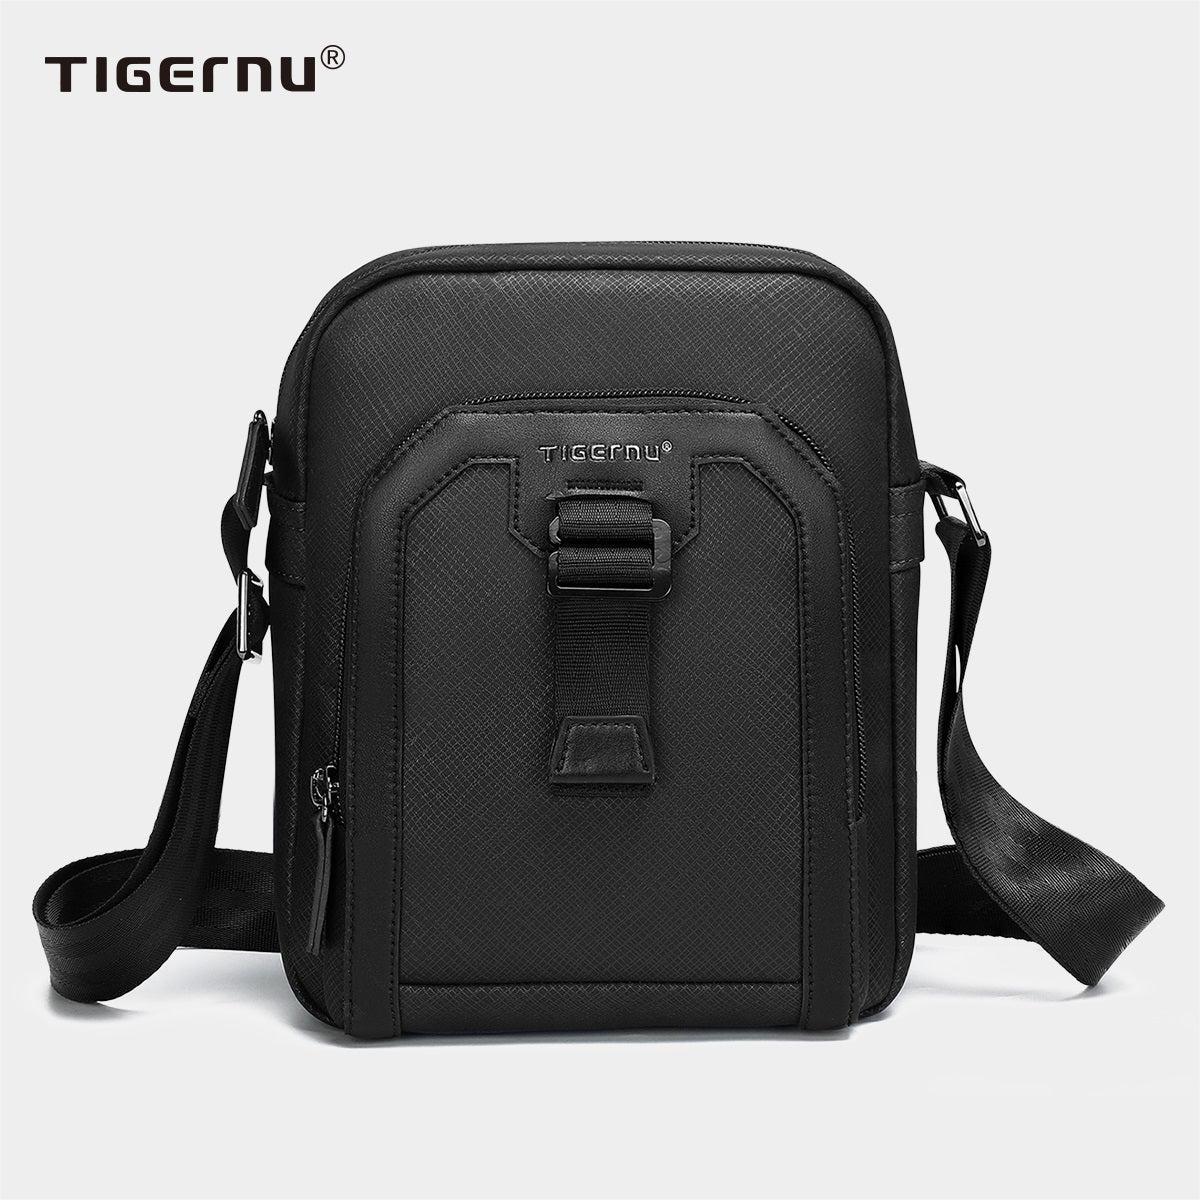 Tigernu Elite Series Classic Men Messenger Bag for Mini iPad 7.9inch